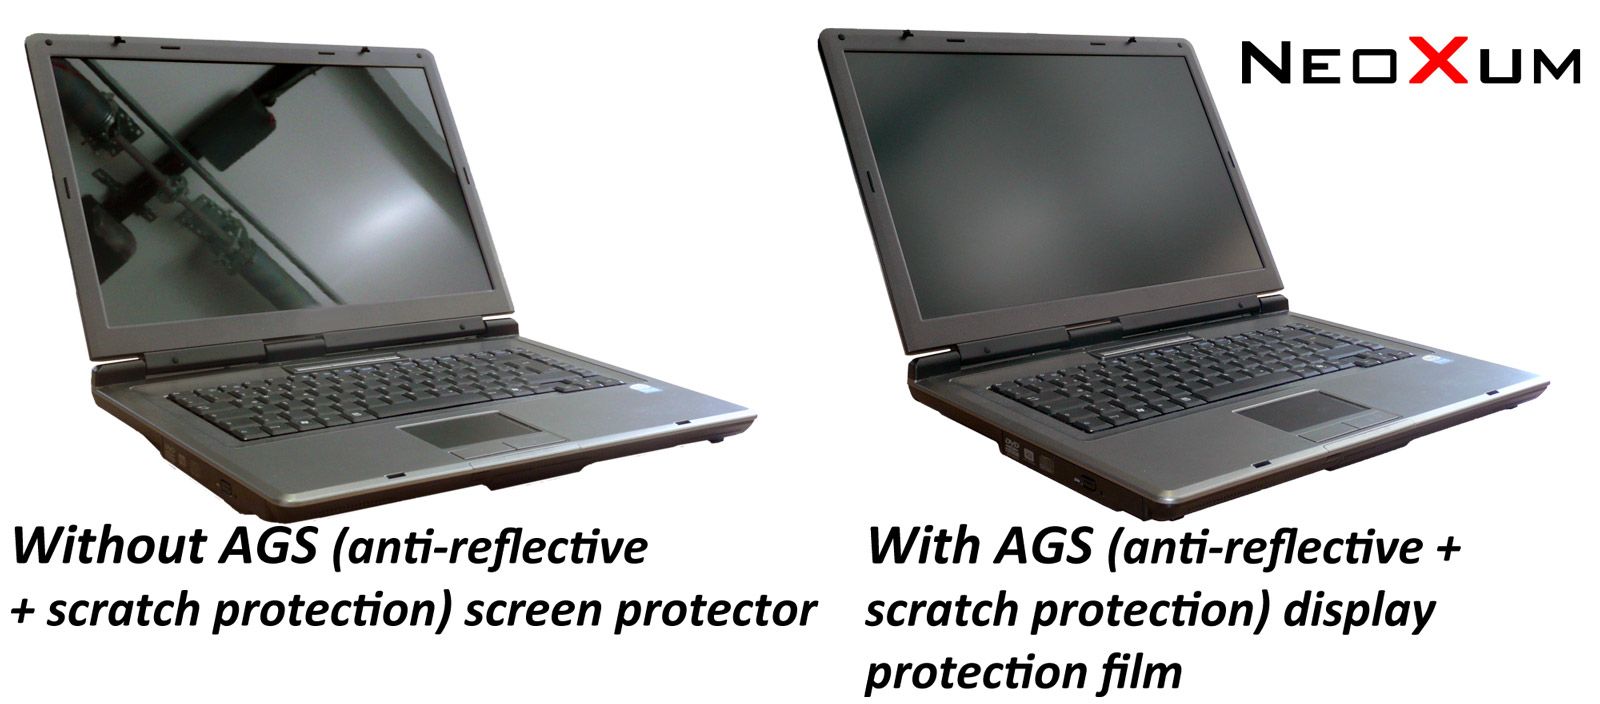 Notebook anti-glare protection film from Neoxum